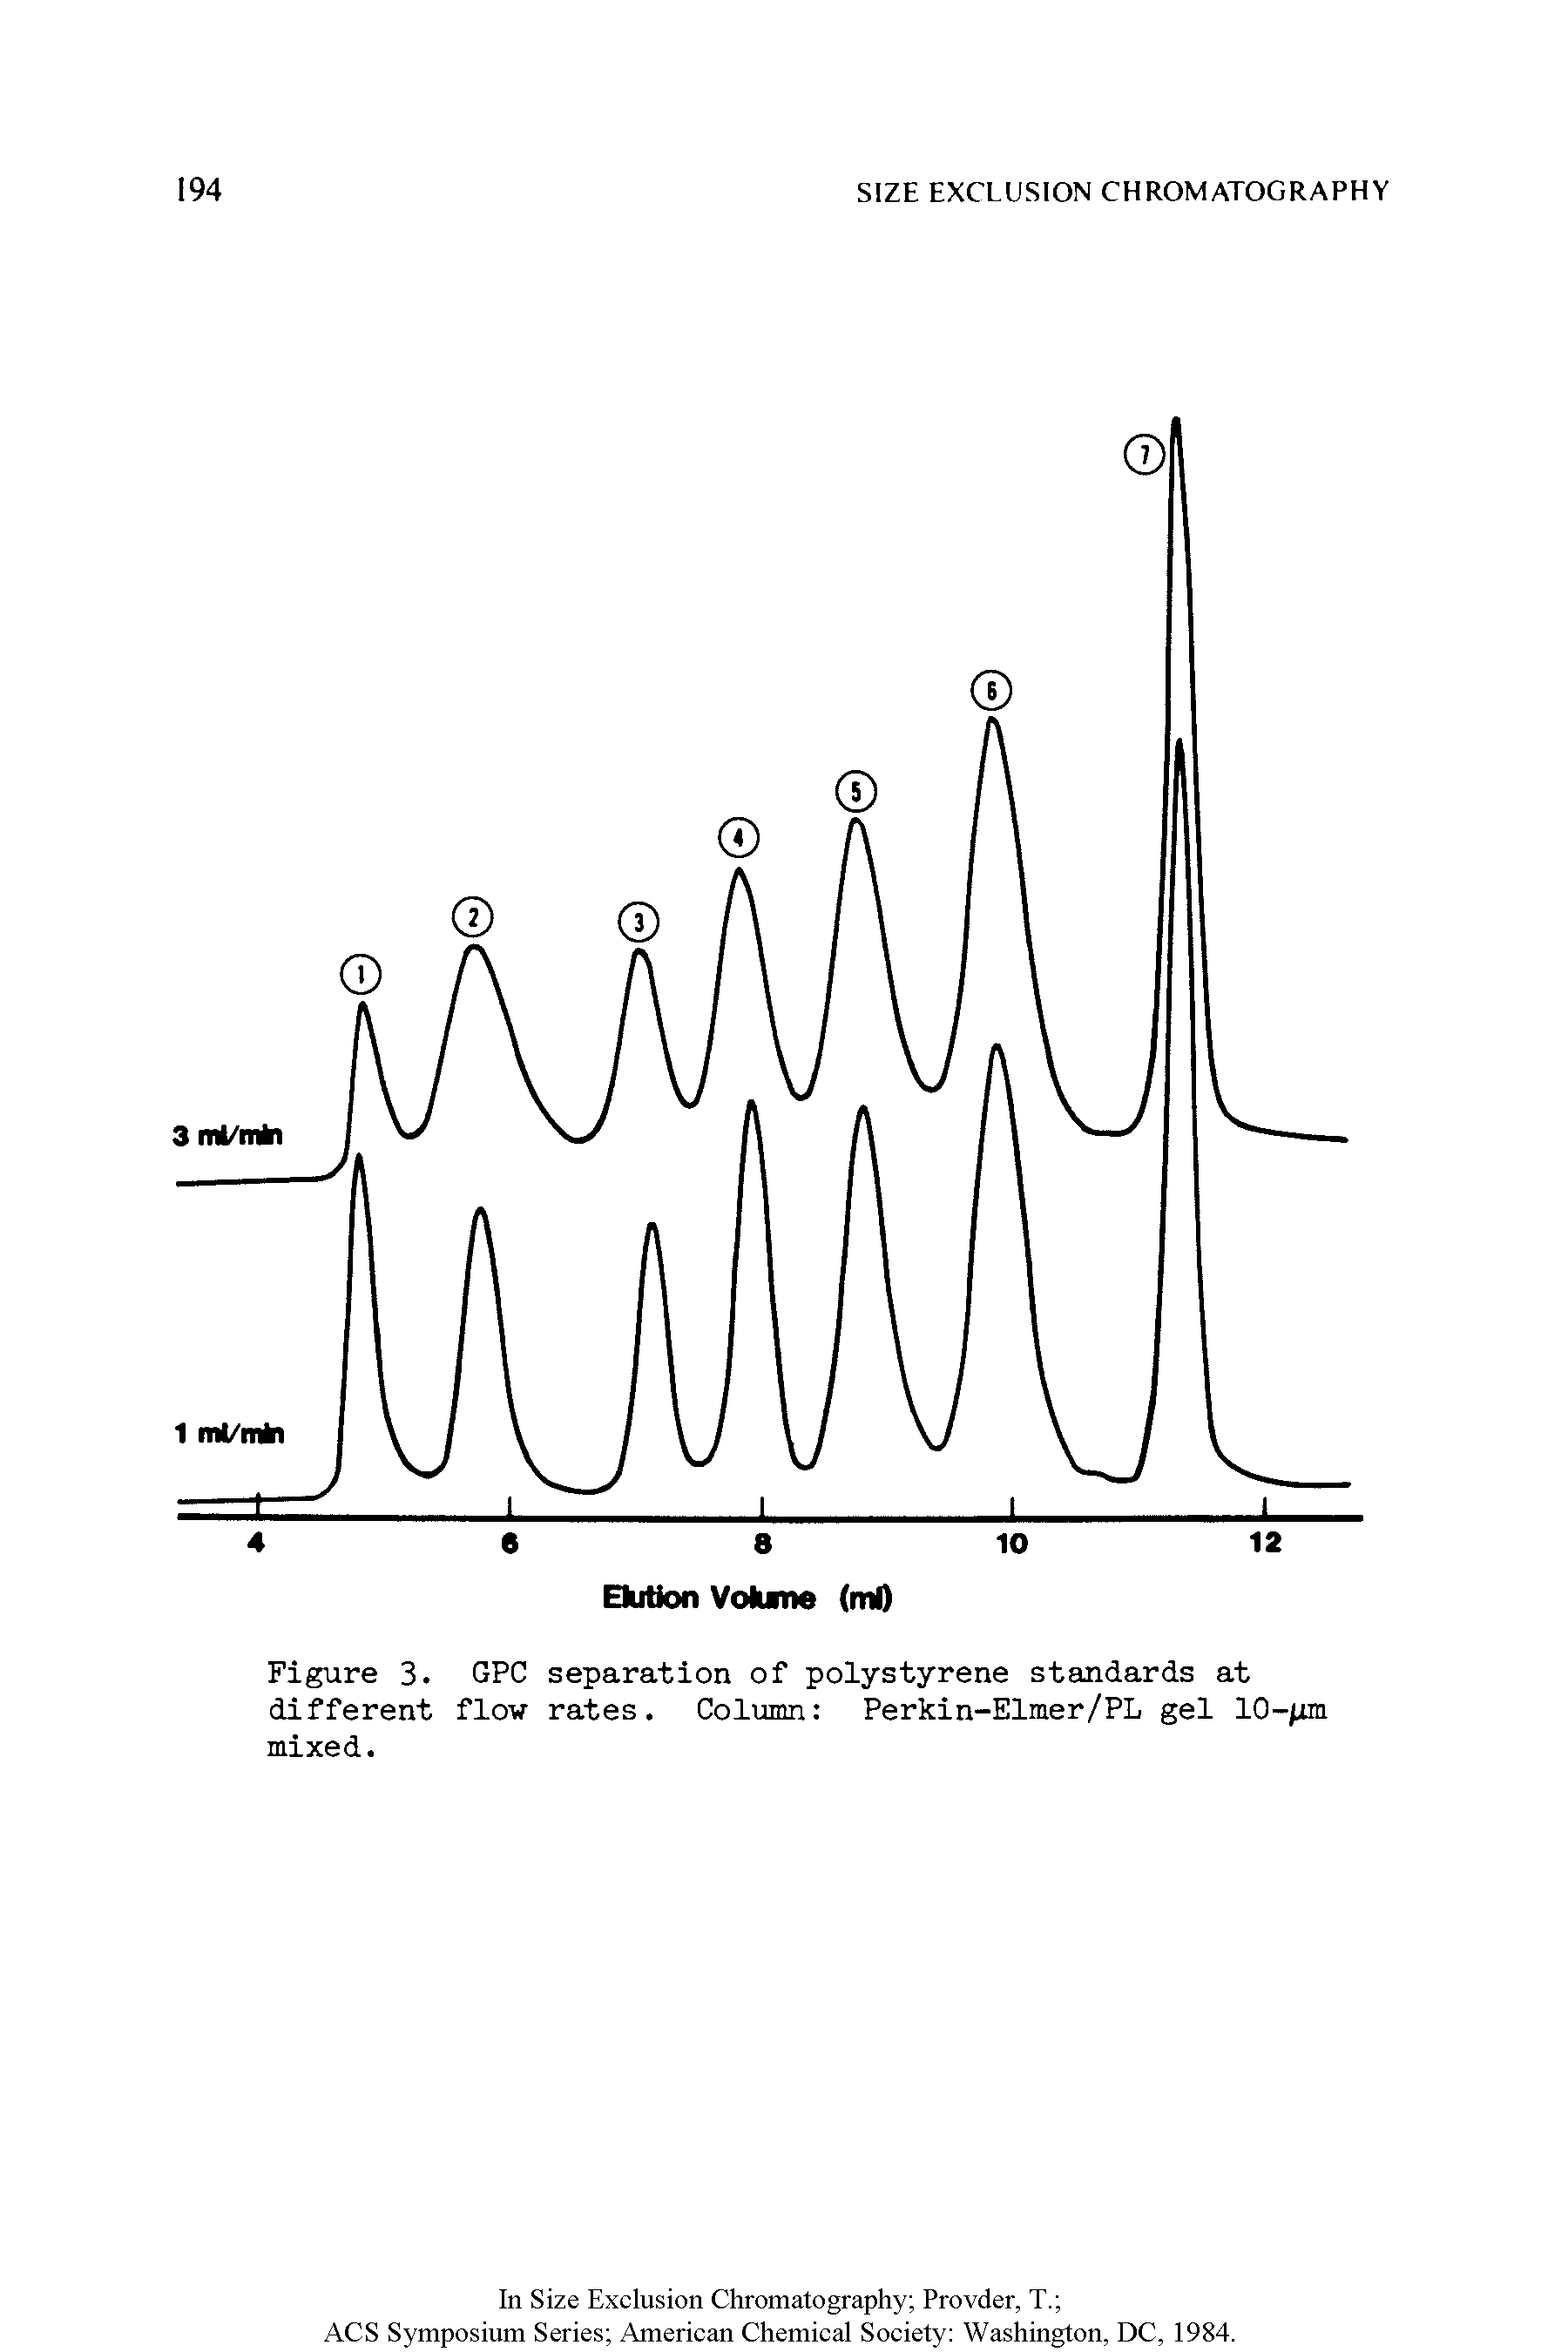 Figure 3. GPC separation of polystyrene standards at different flow rates. Column Perkin-Elmer/PL gel 10- mixed.